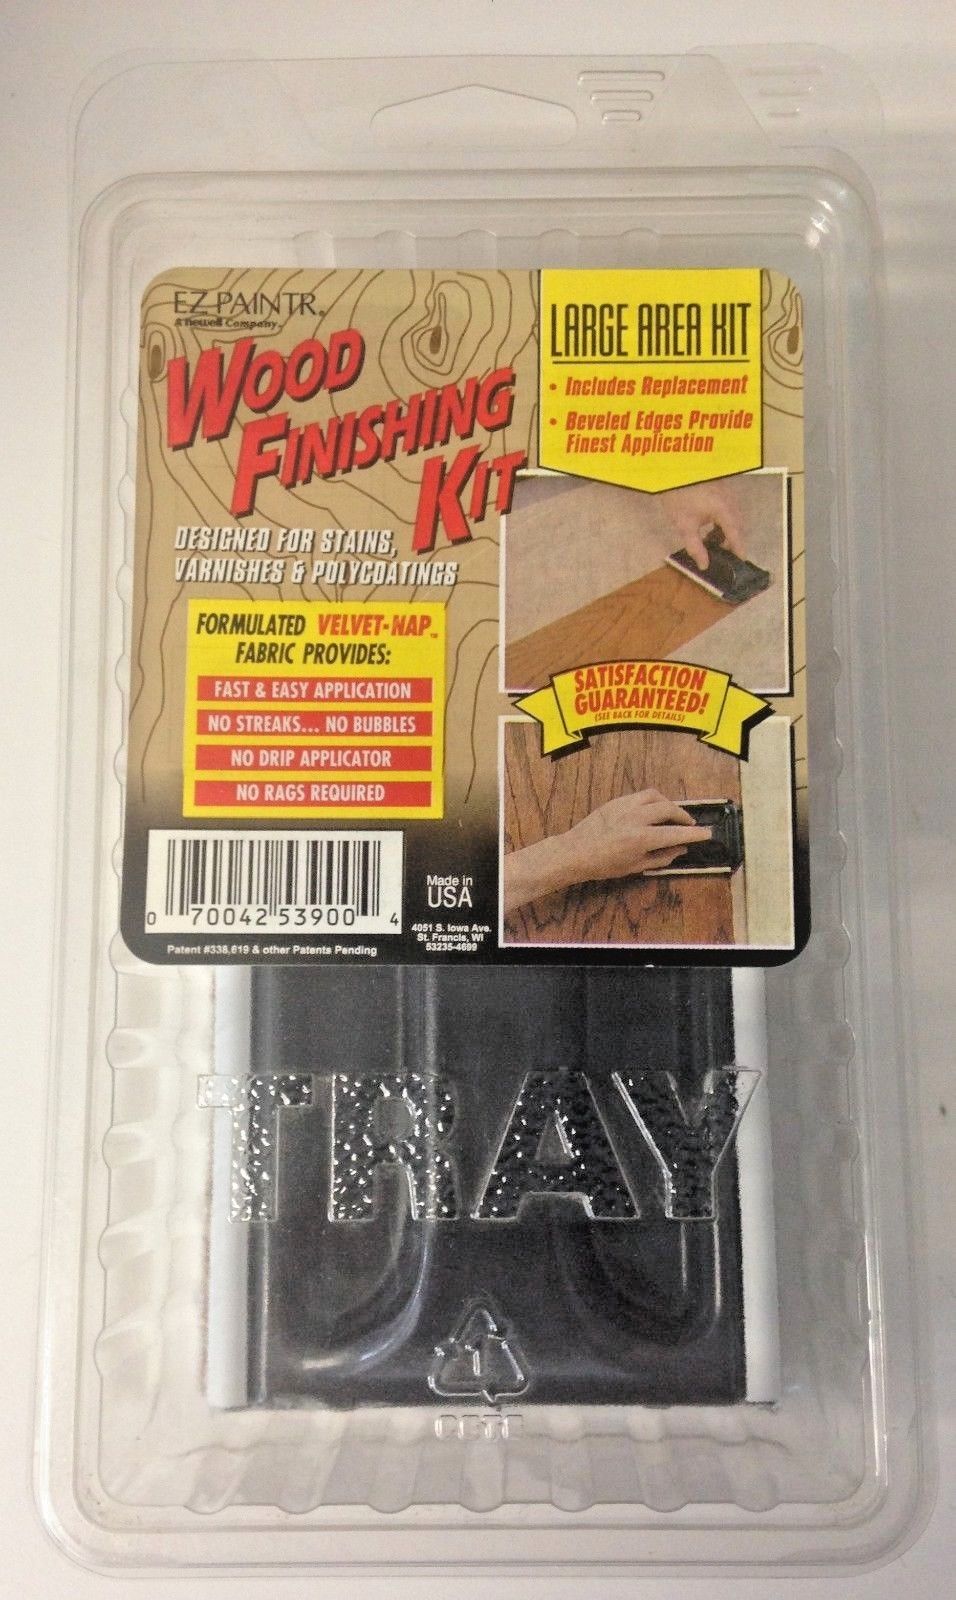 EZ Paintr Wood Finishing Kit Designed For Stains, Varnishes, & Polycoatings USA